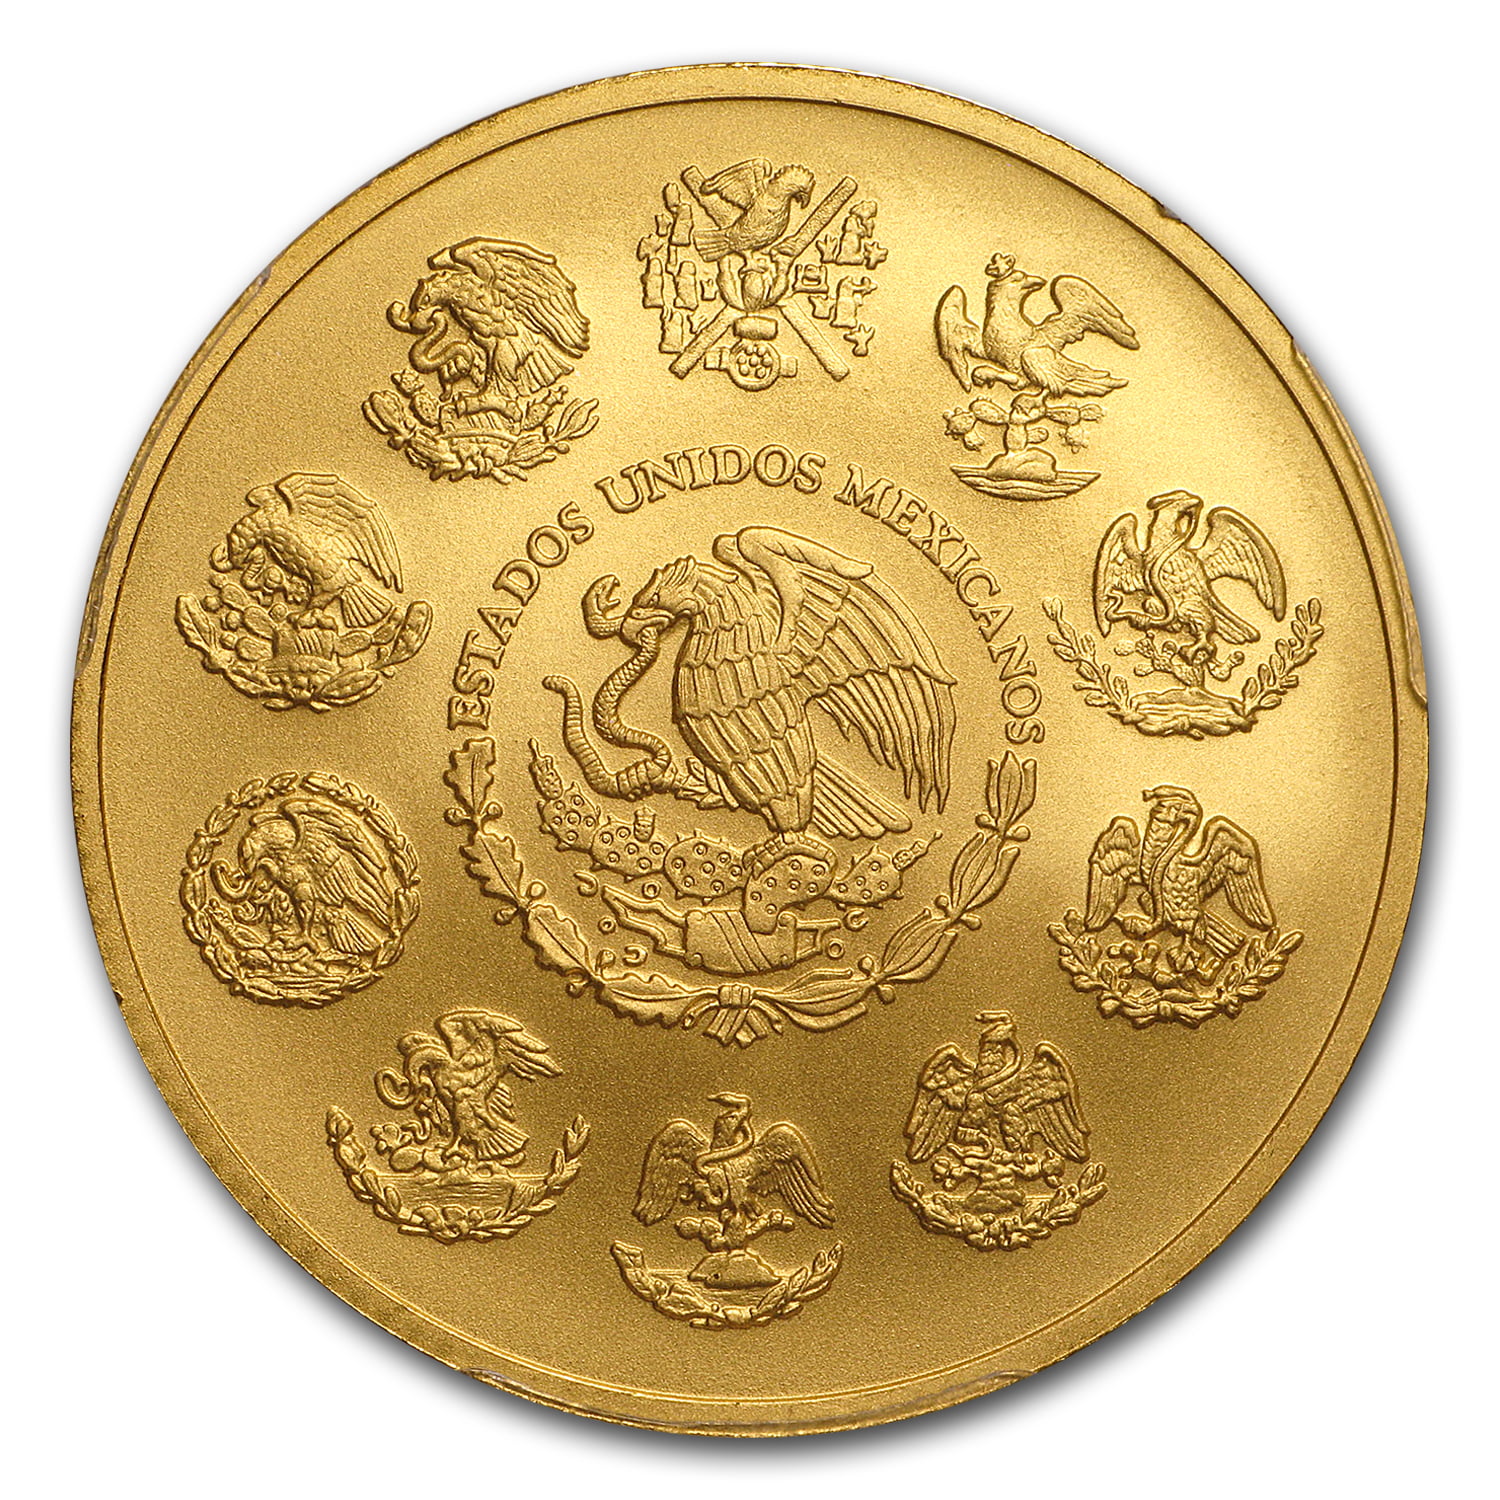 2016 Mexico 1 oz Gold Libertad MS-69 PCGS (Green Label) - Walmart.com